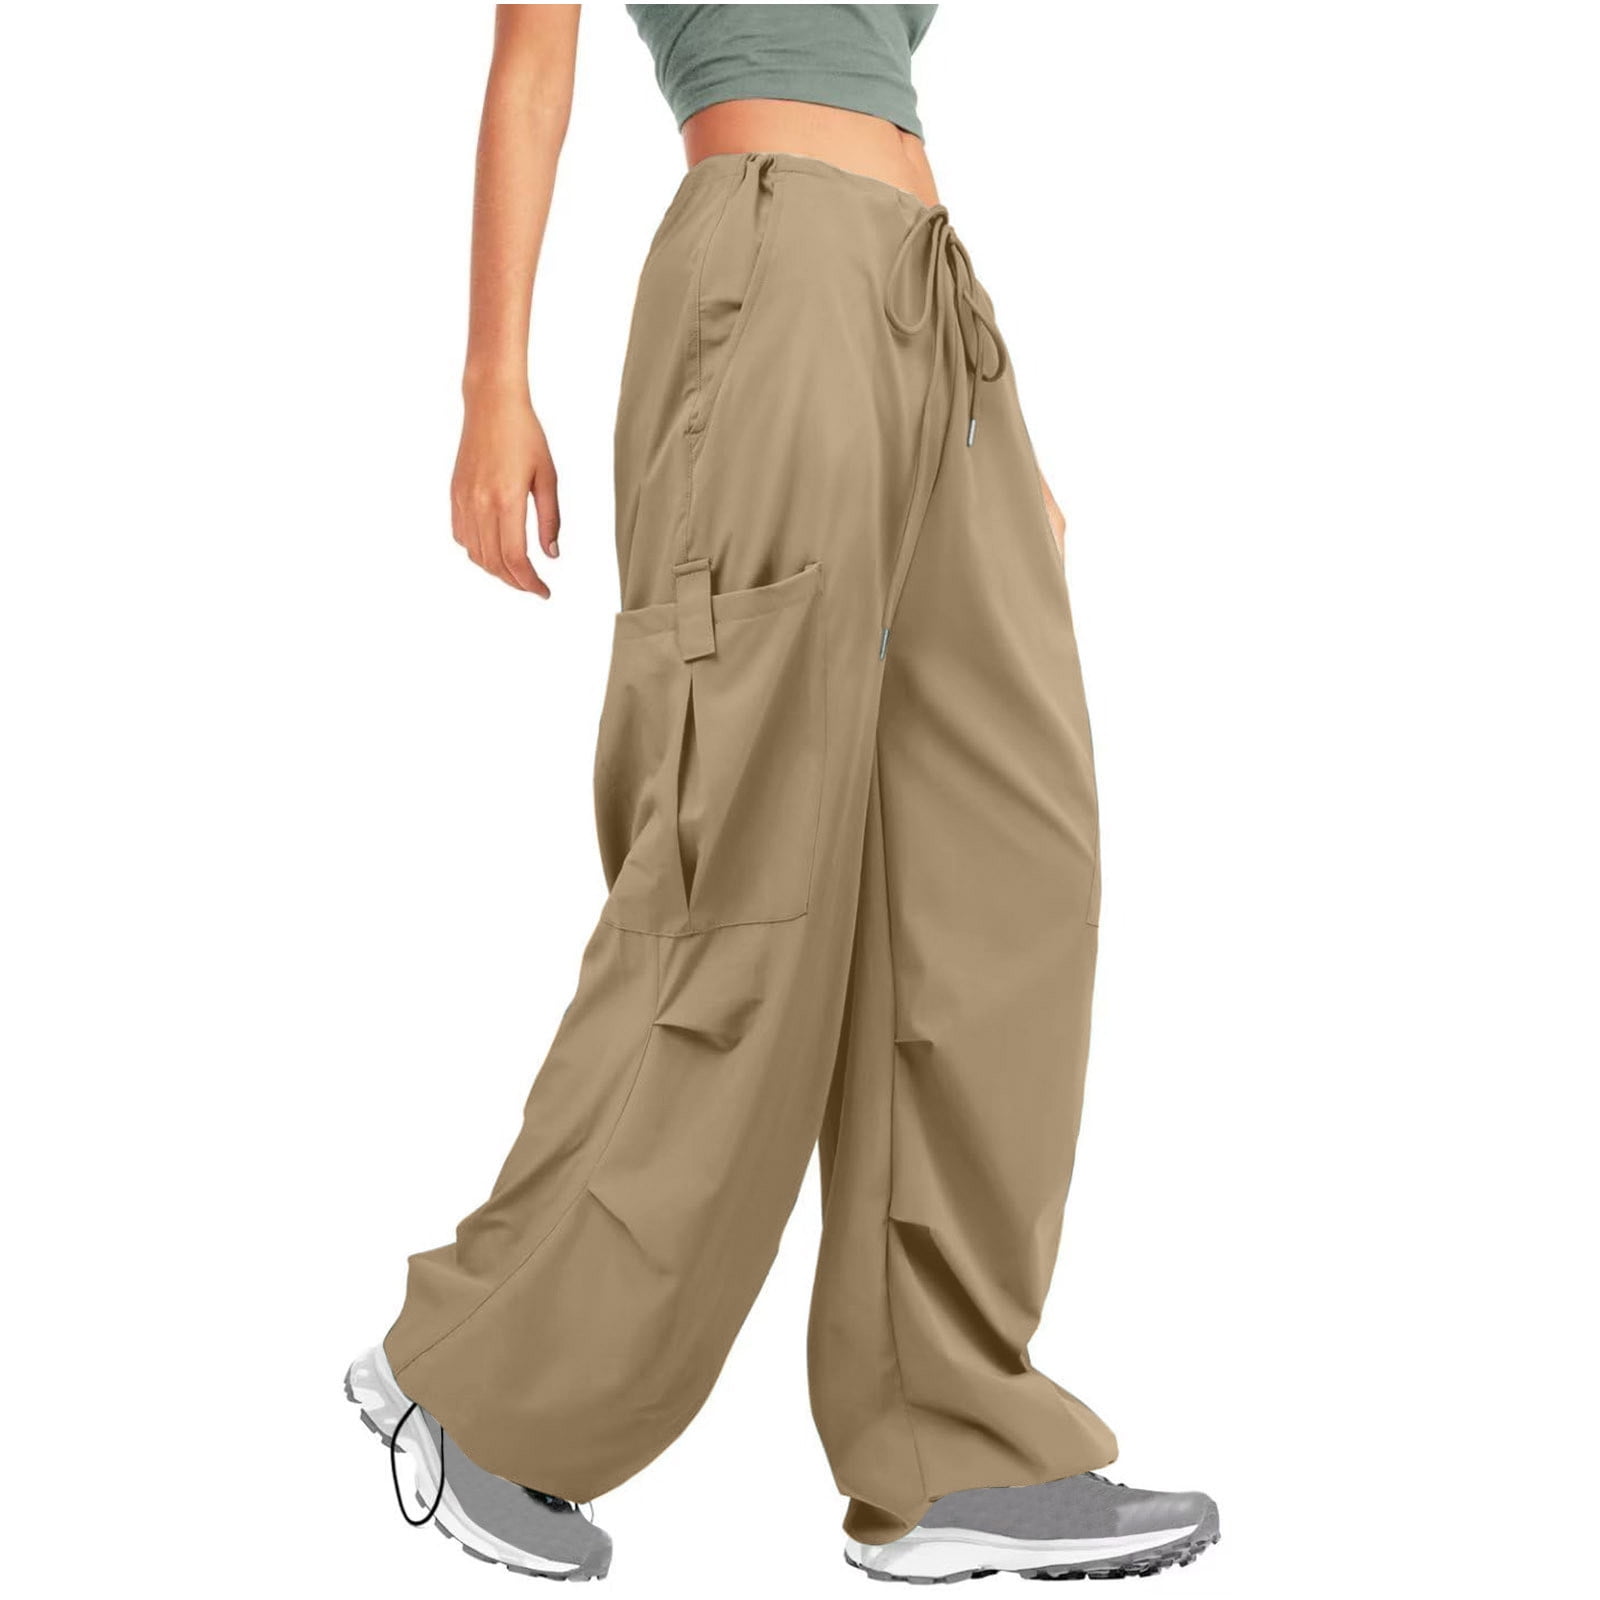 VSSSJ Women's Hot Girl Style Cargo Pants Regular Fit Solid Color